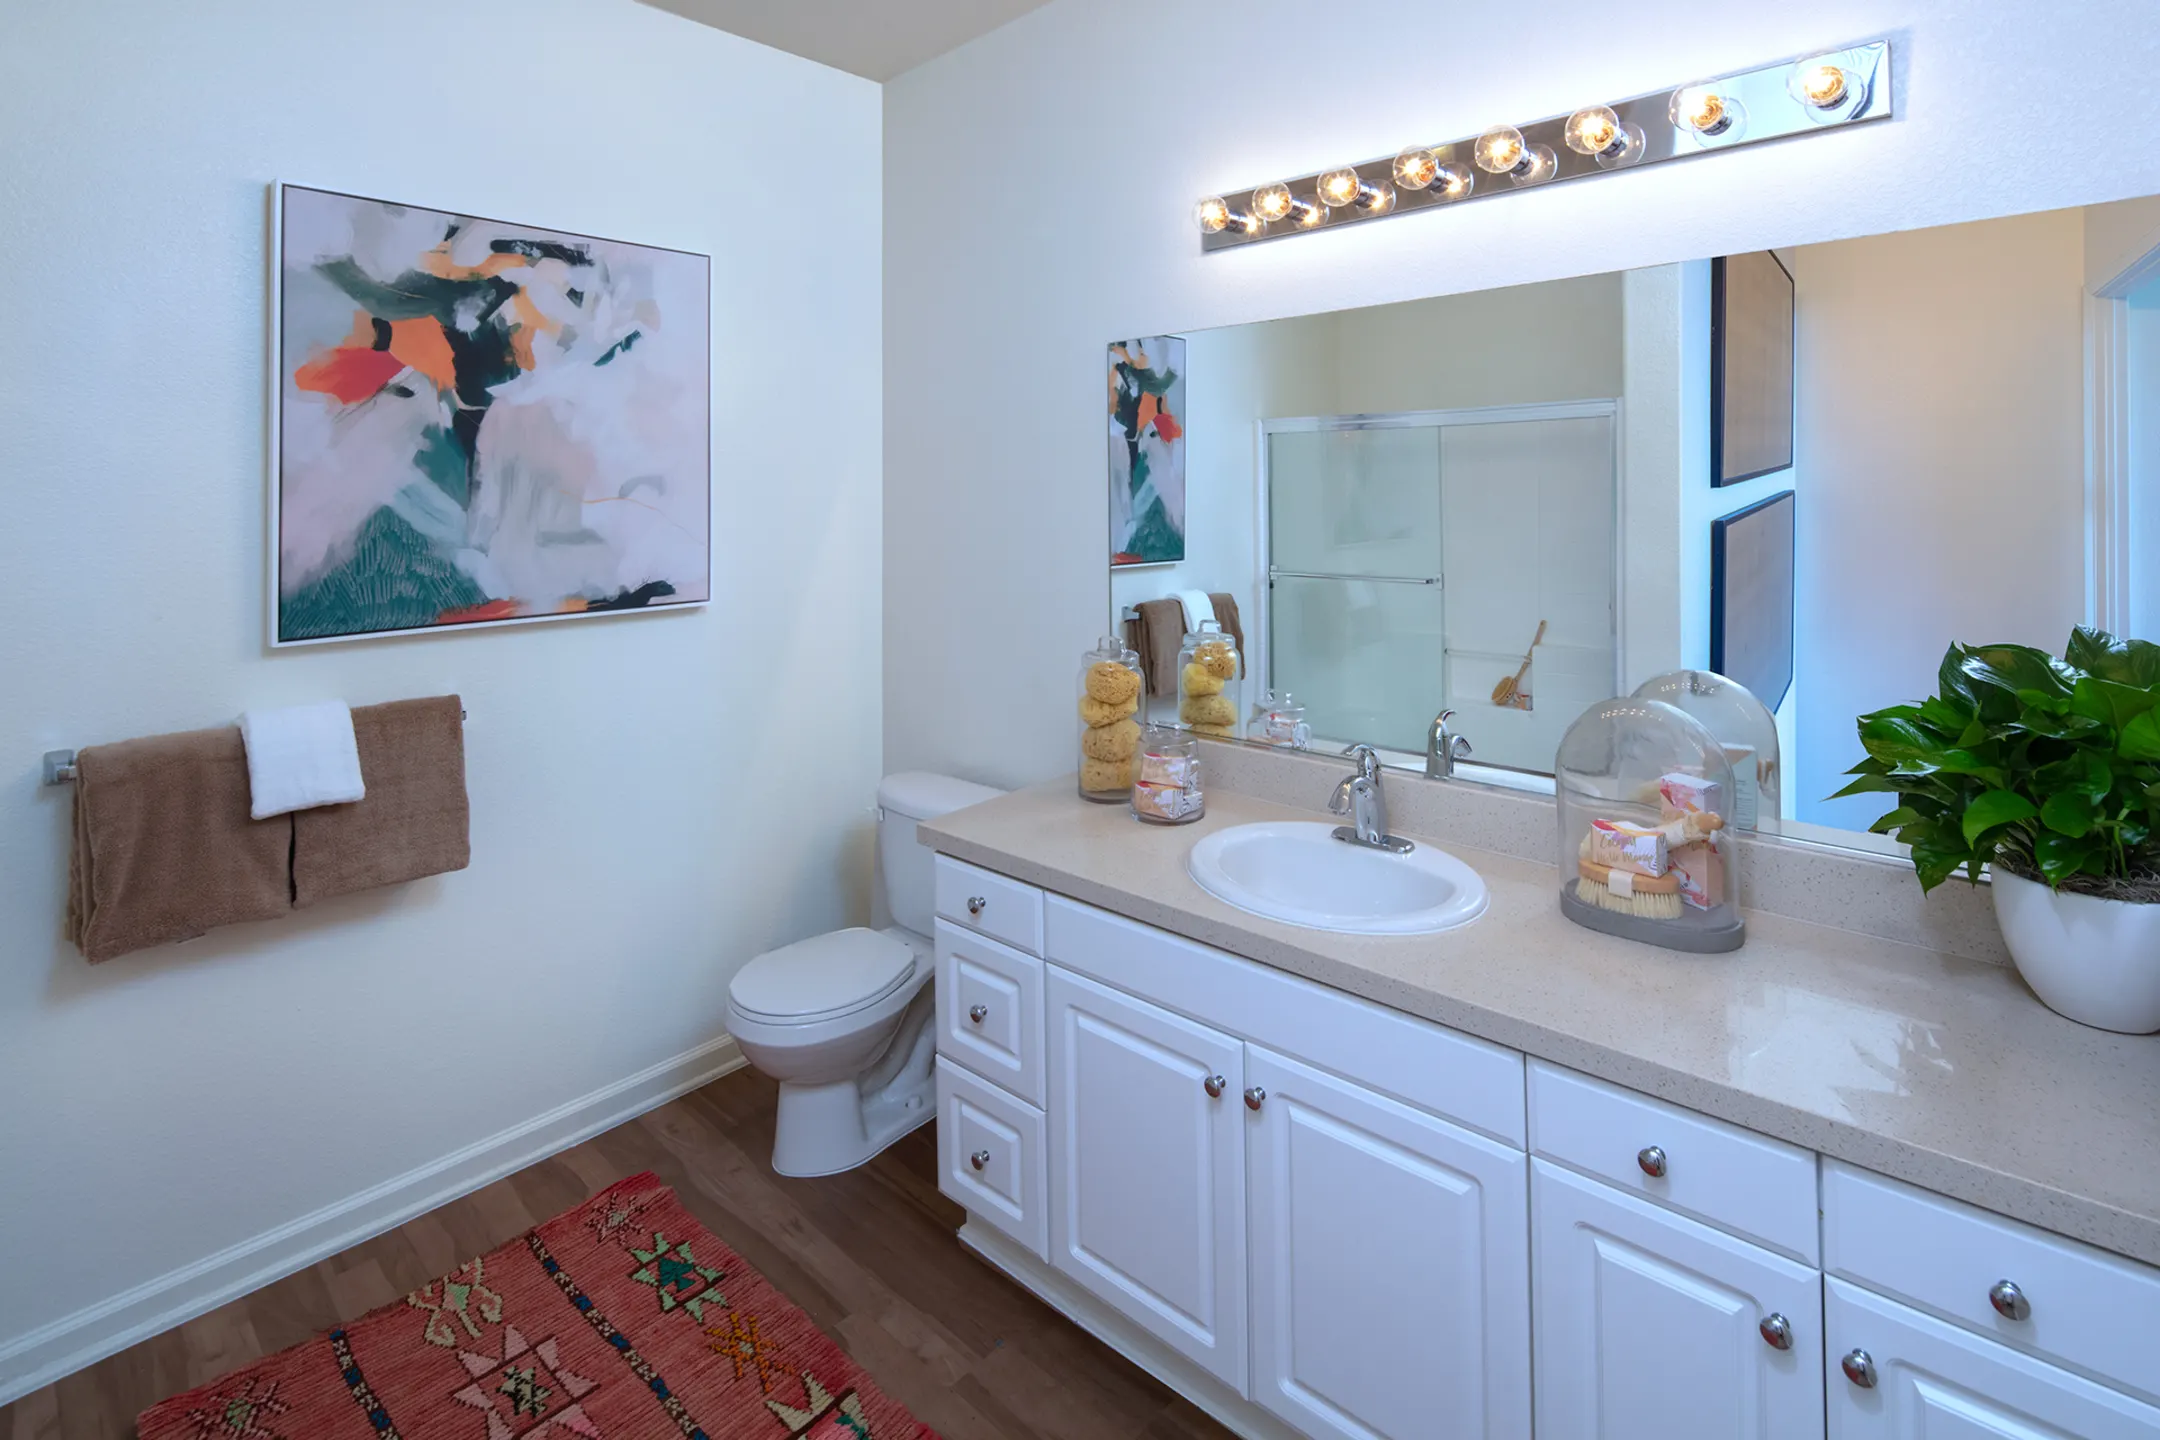 Bathroom - Vista Real Apartment Homes - Mission Viejo, CA